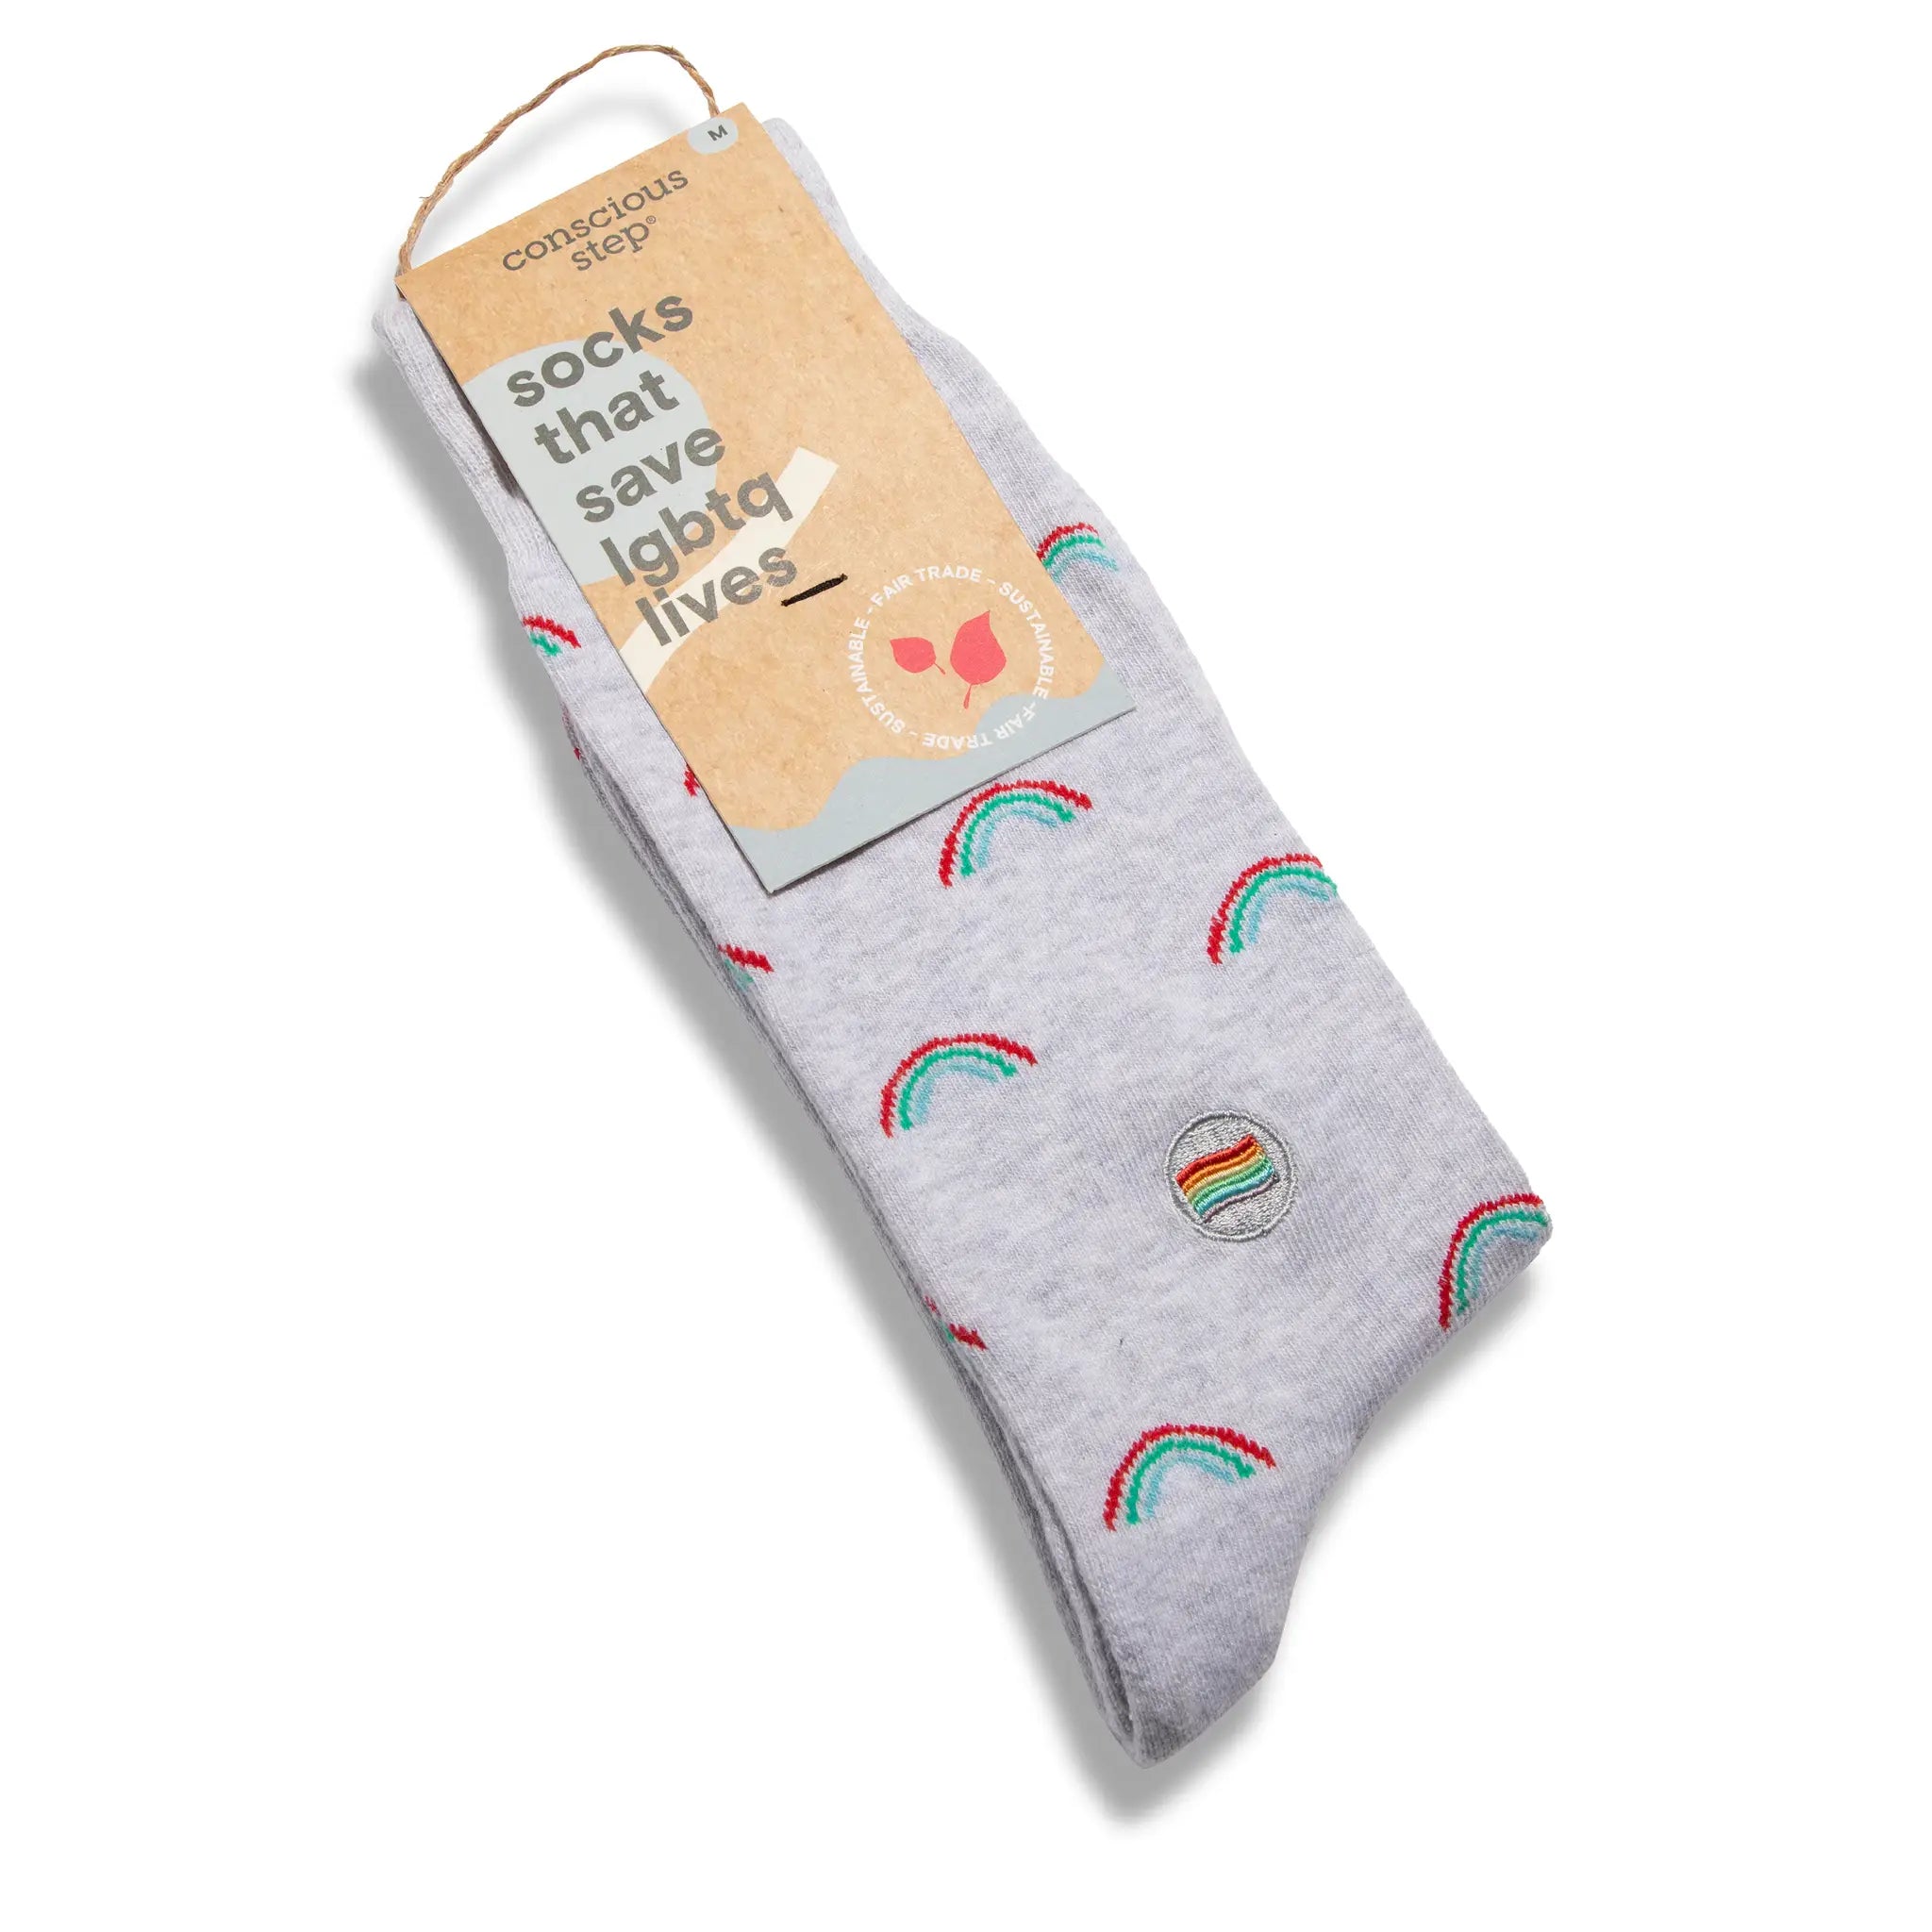 socks that save LGBTQ lives (rainbow) by conscious step